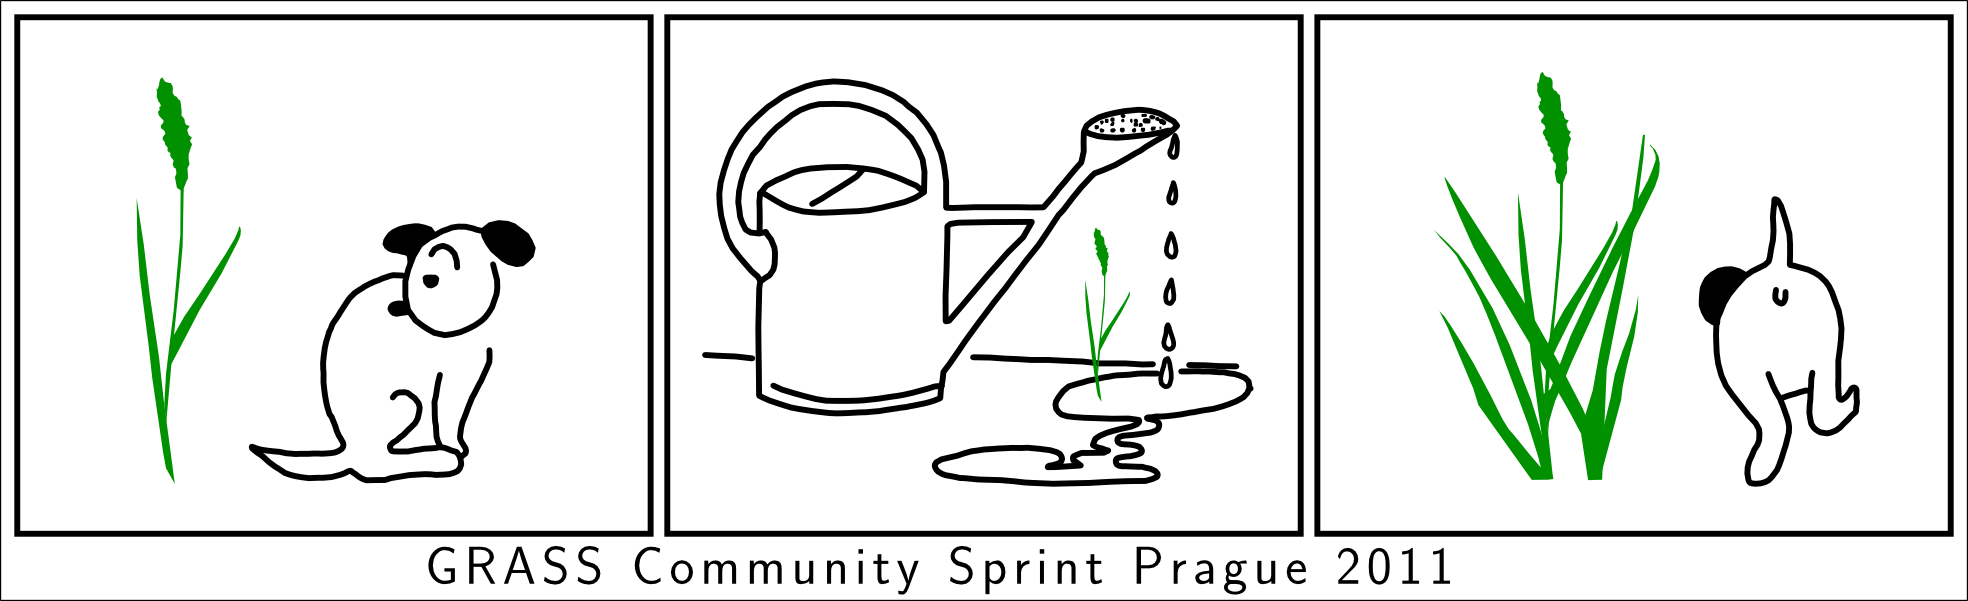 Community sprint prague 2011.png